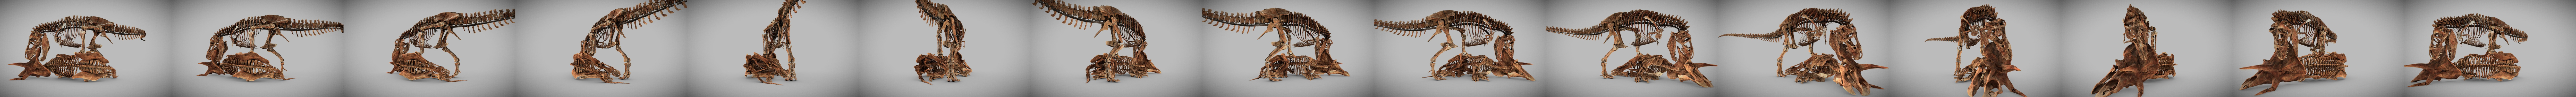 Tyrannosaurus Rex Triceratops Smithsoniandpo Download Free 3d Model By Thomas Flynn Nebulousflynn E9fa58a Sketchfab - t rex skeleton roblox codes